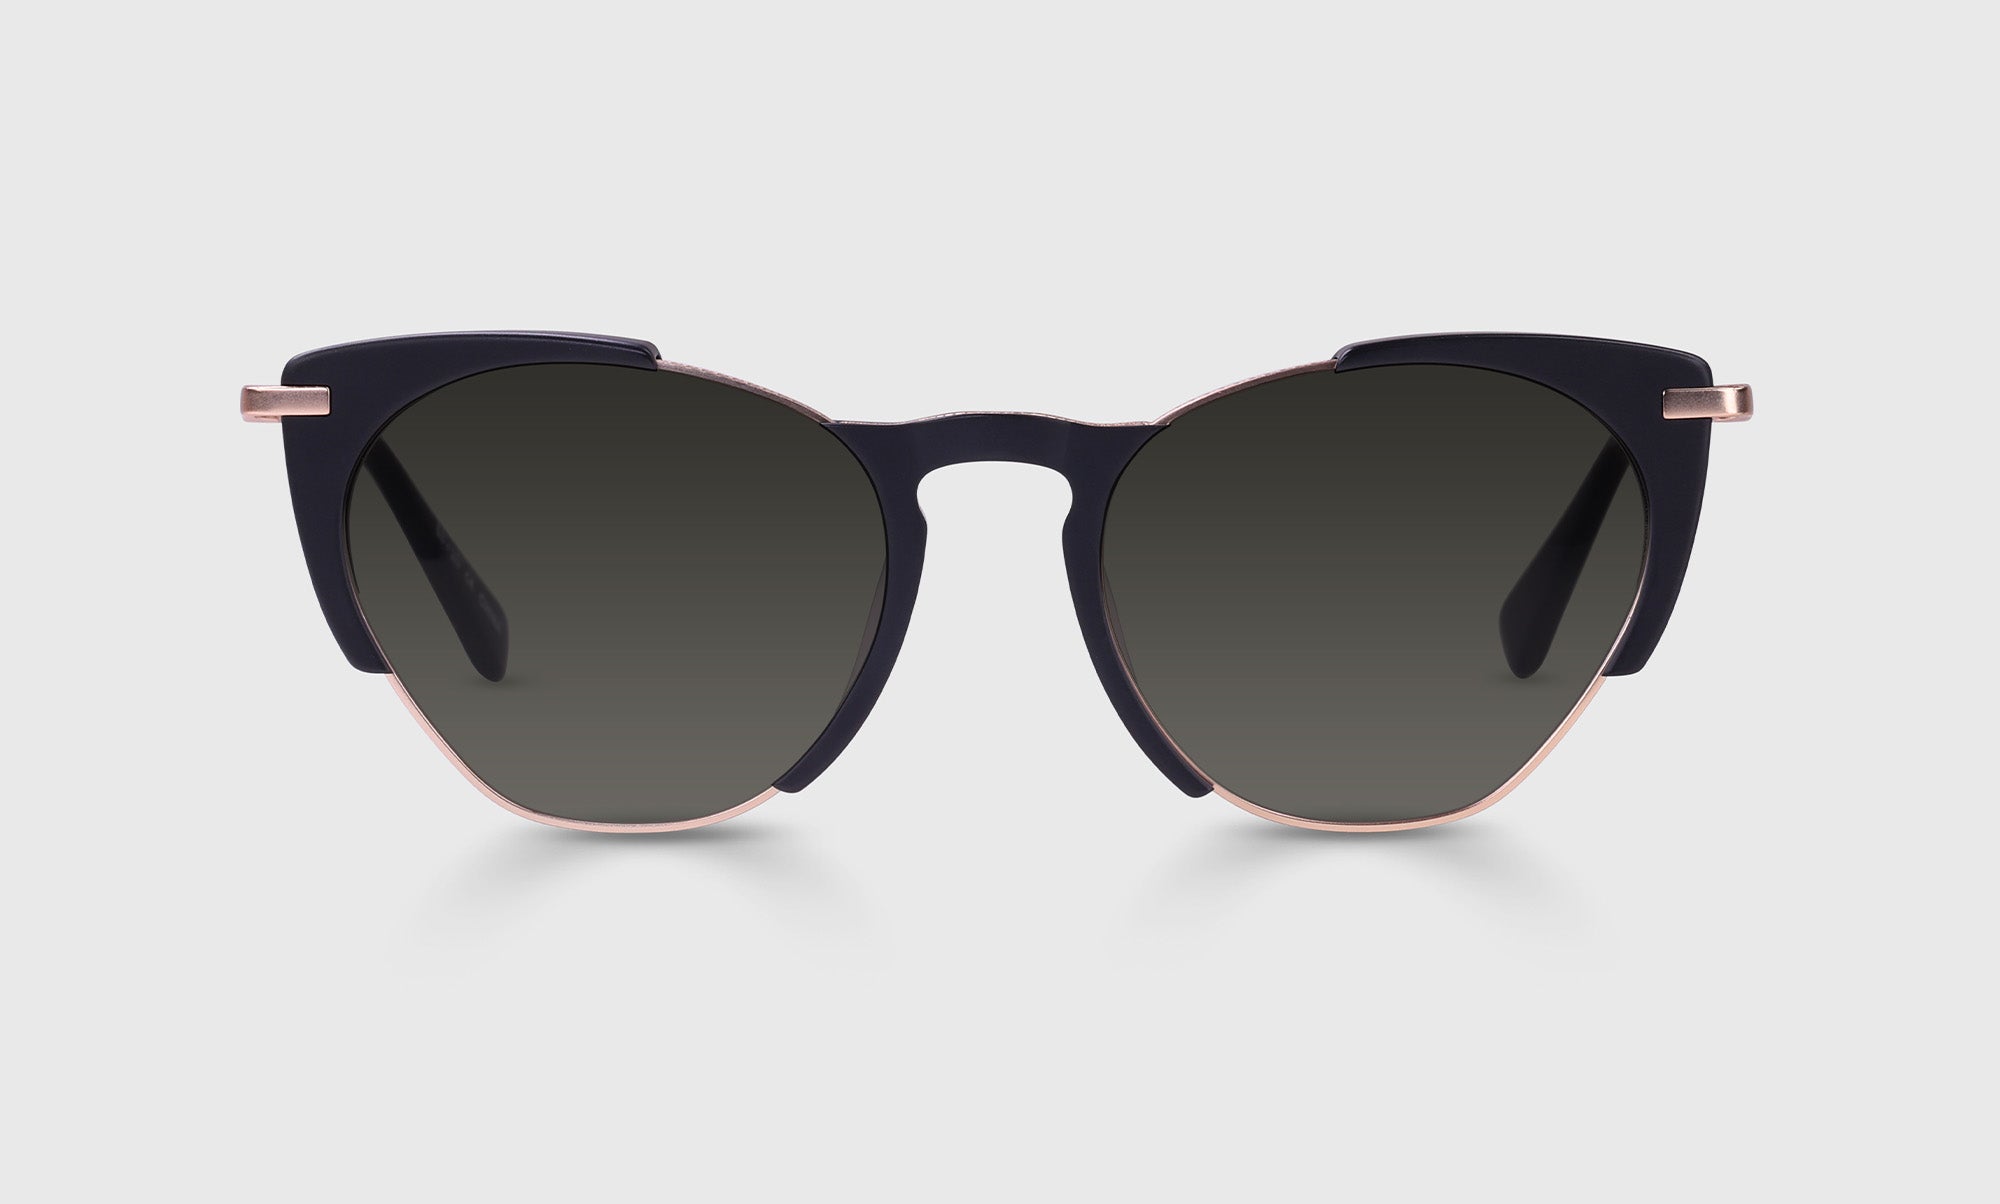 00-pg | eyebobs Mingled, Wide, Cat-Eye, Reader Sunglasses, Polarized Grey